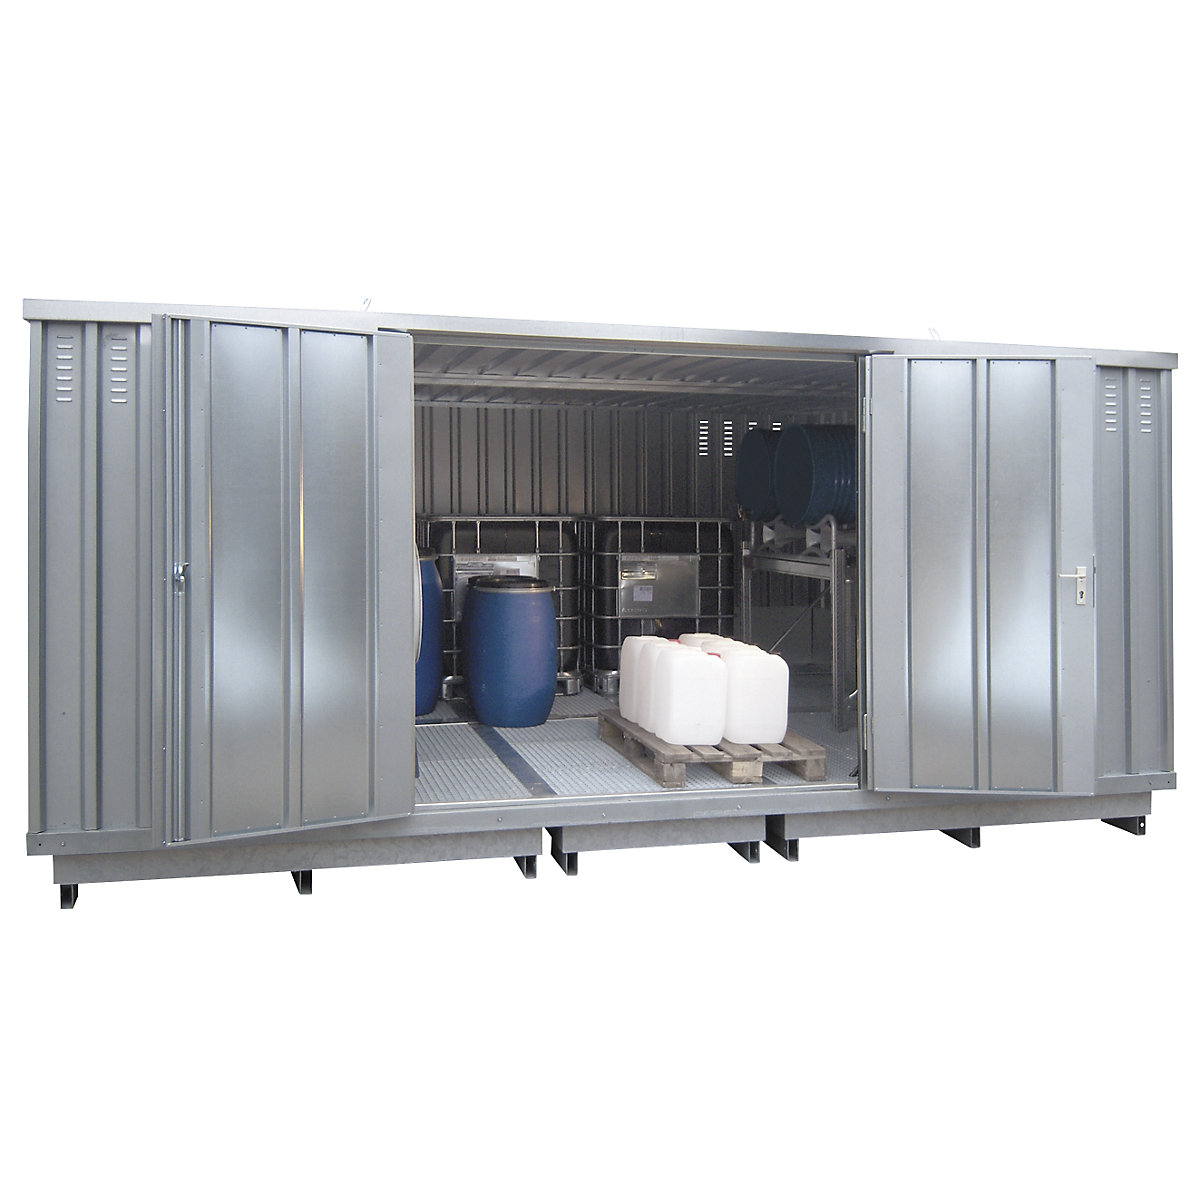 Hazardous goods storage container for water hazardous media - LaCont